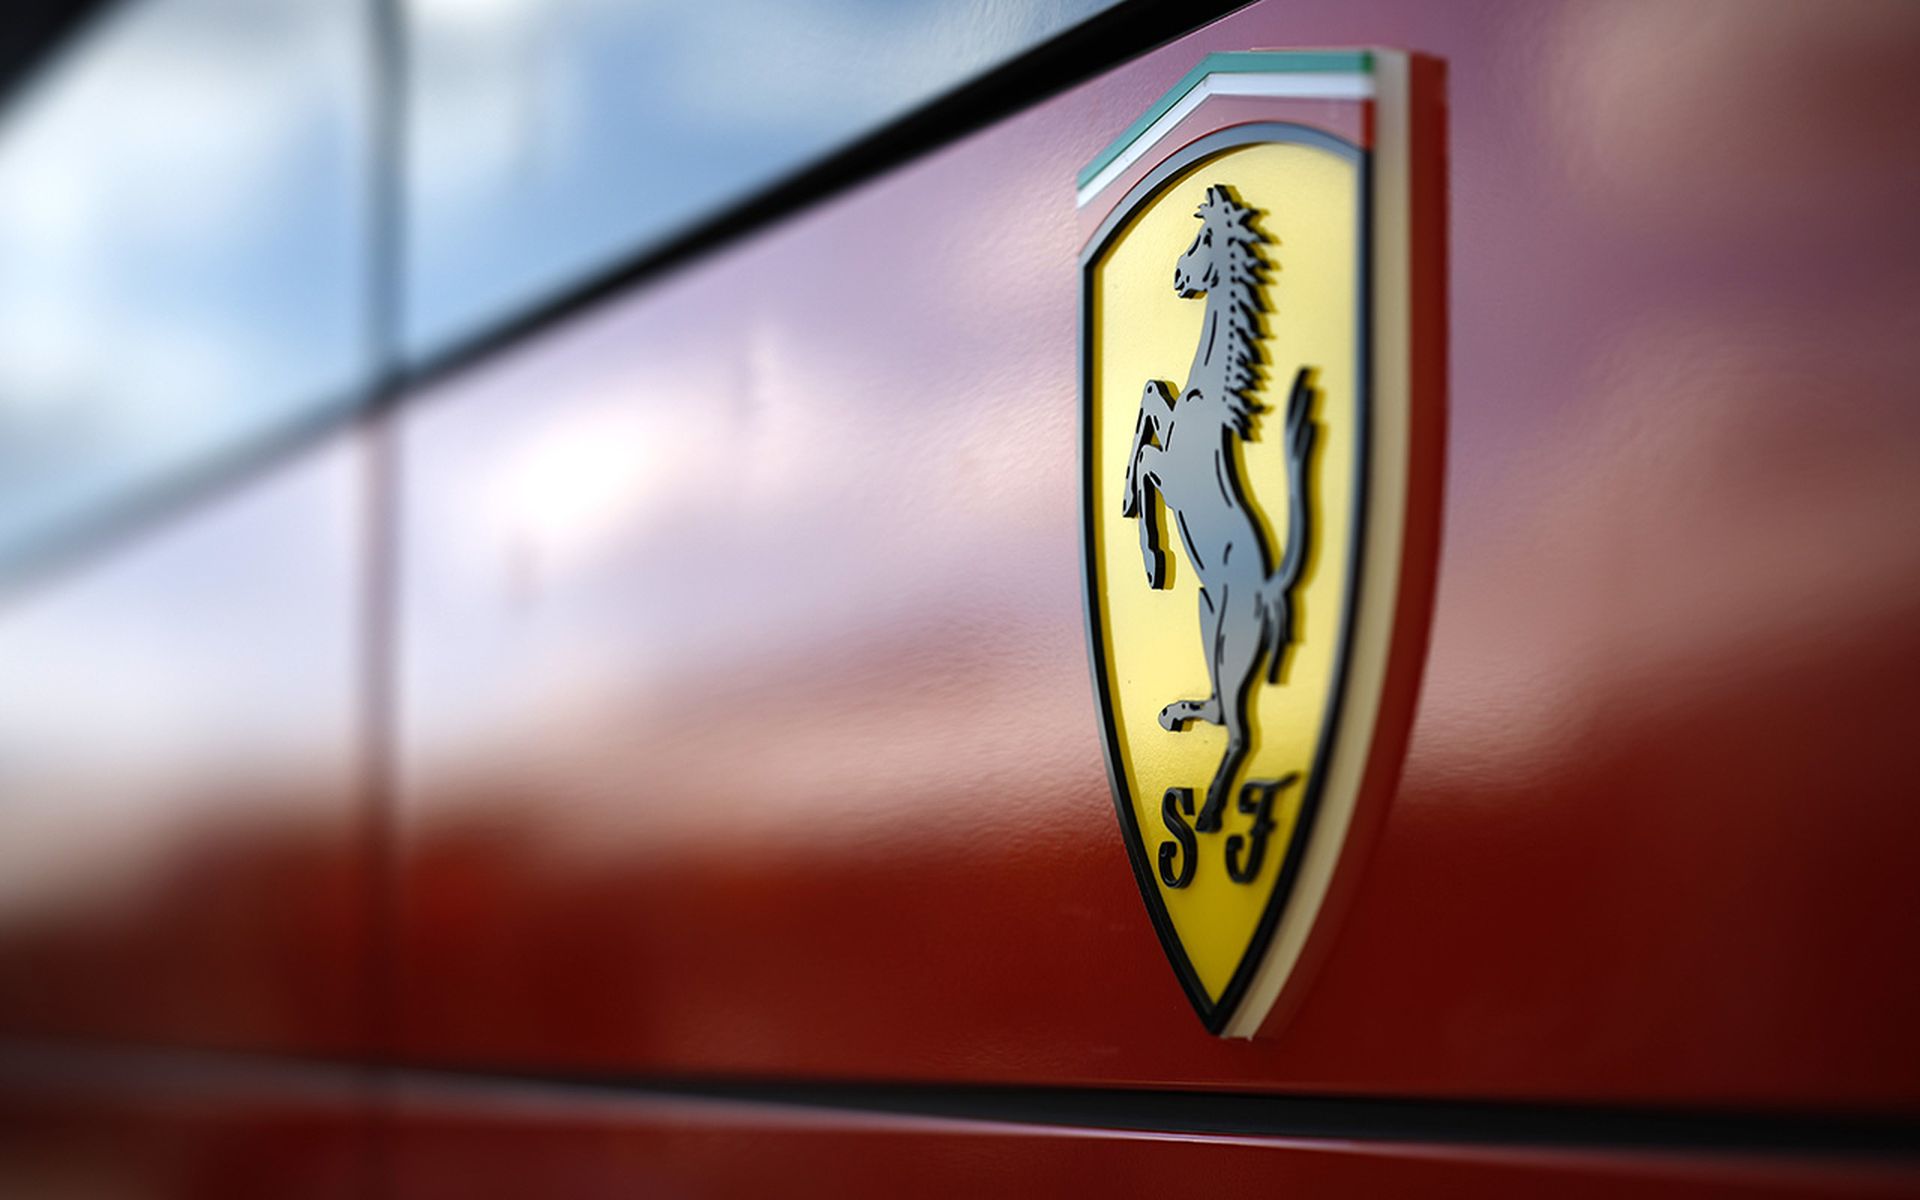 A detail view of a Ferrari logo